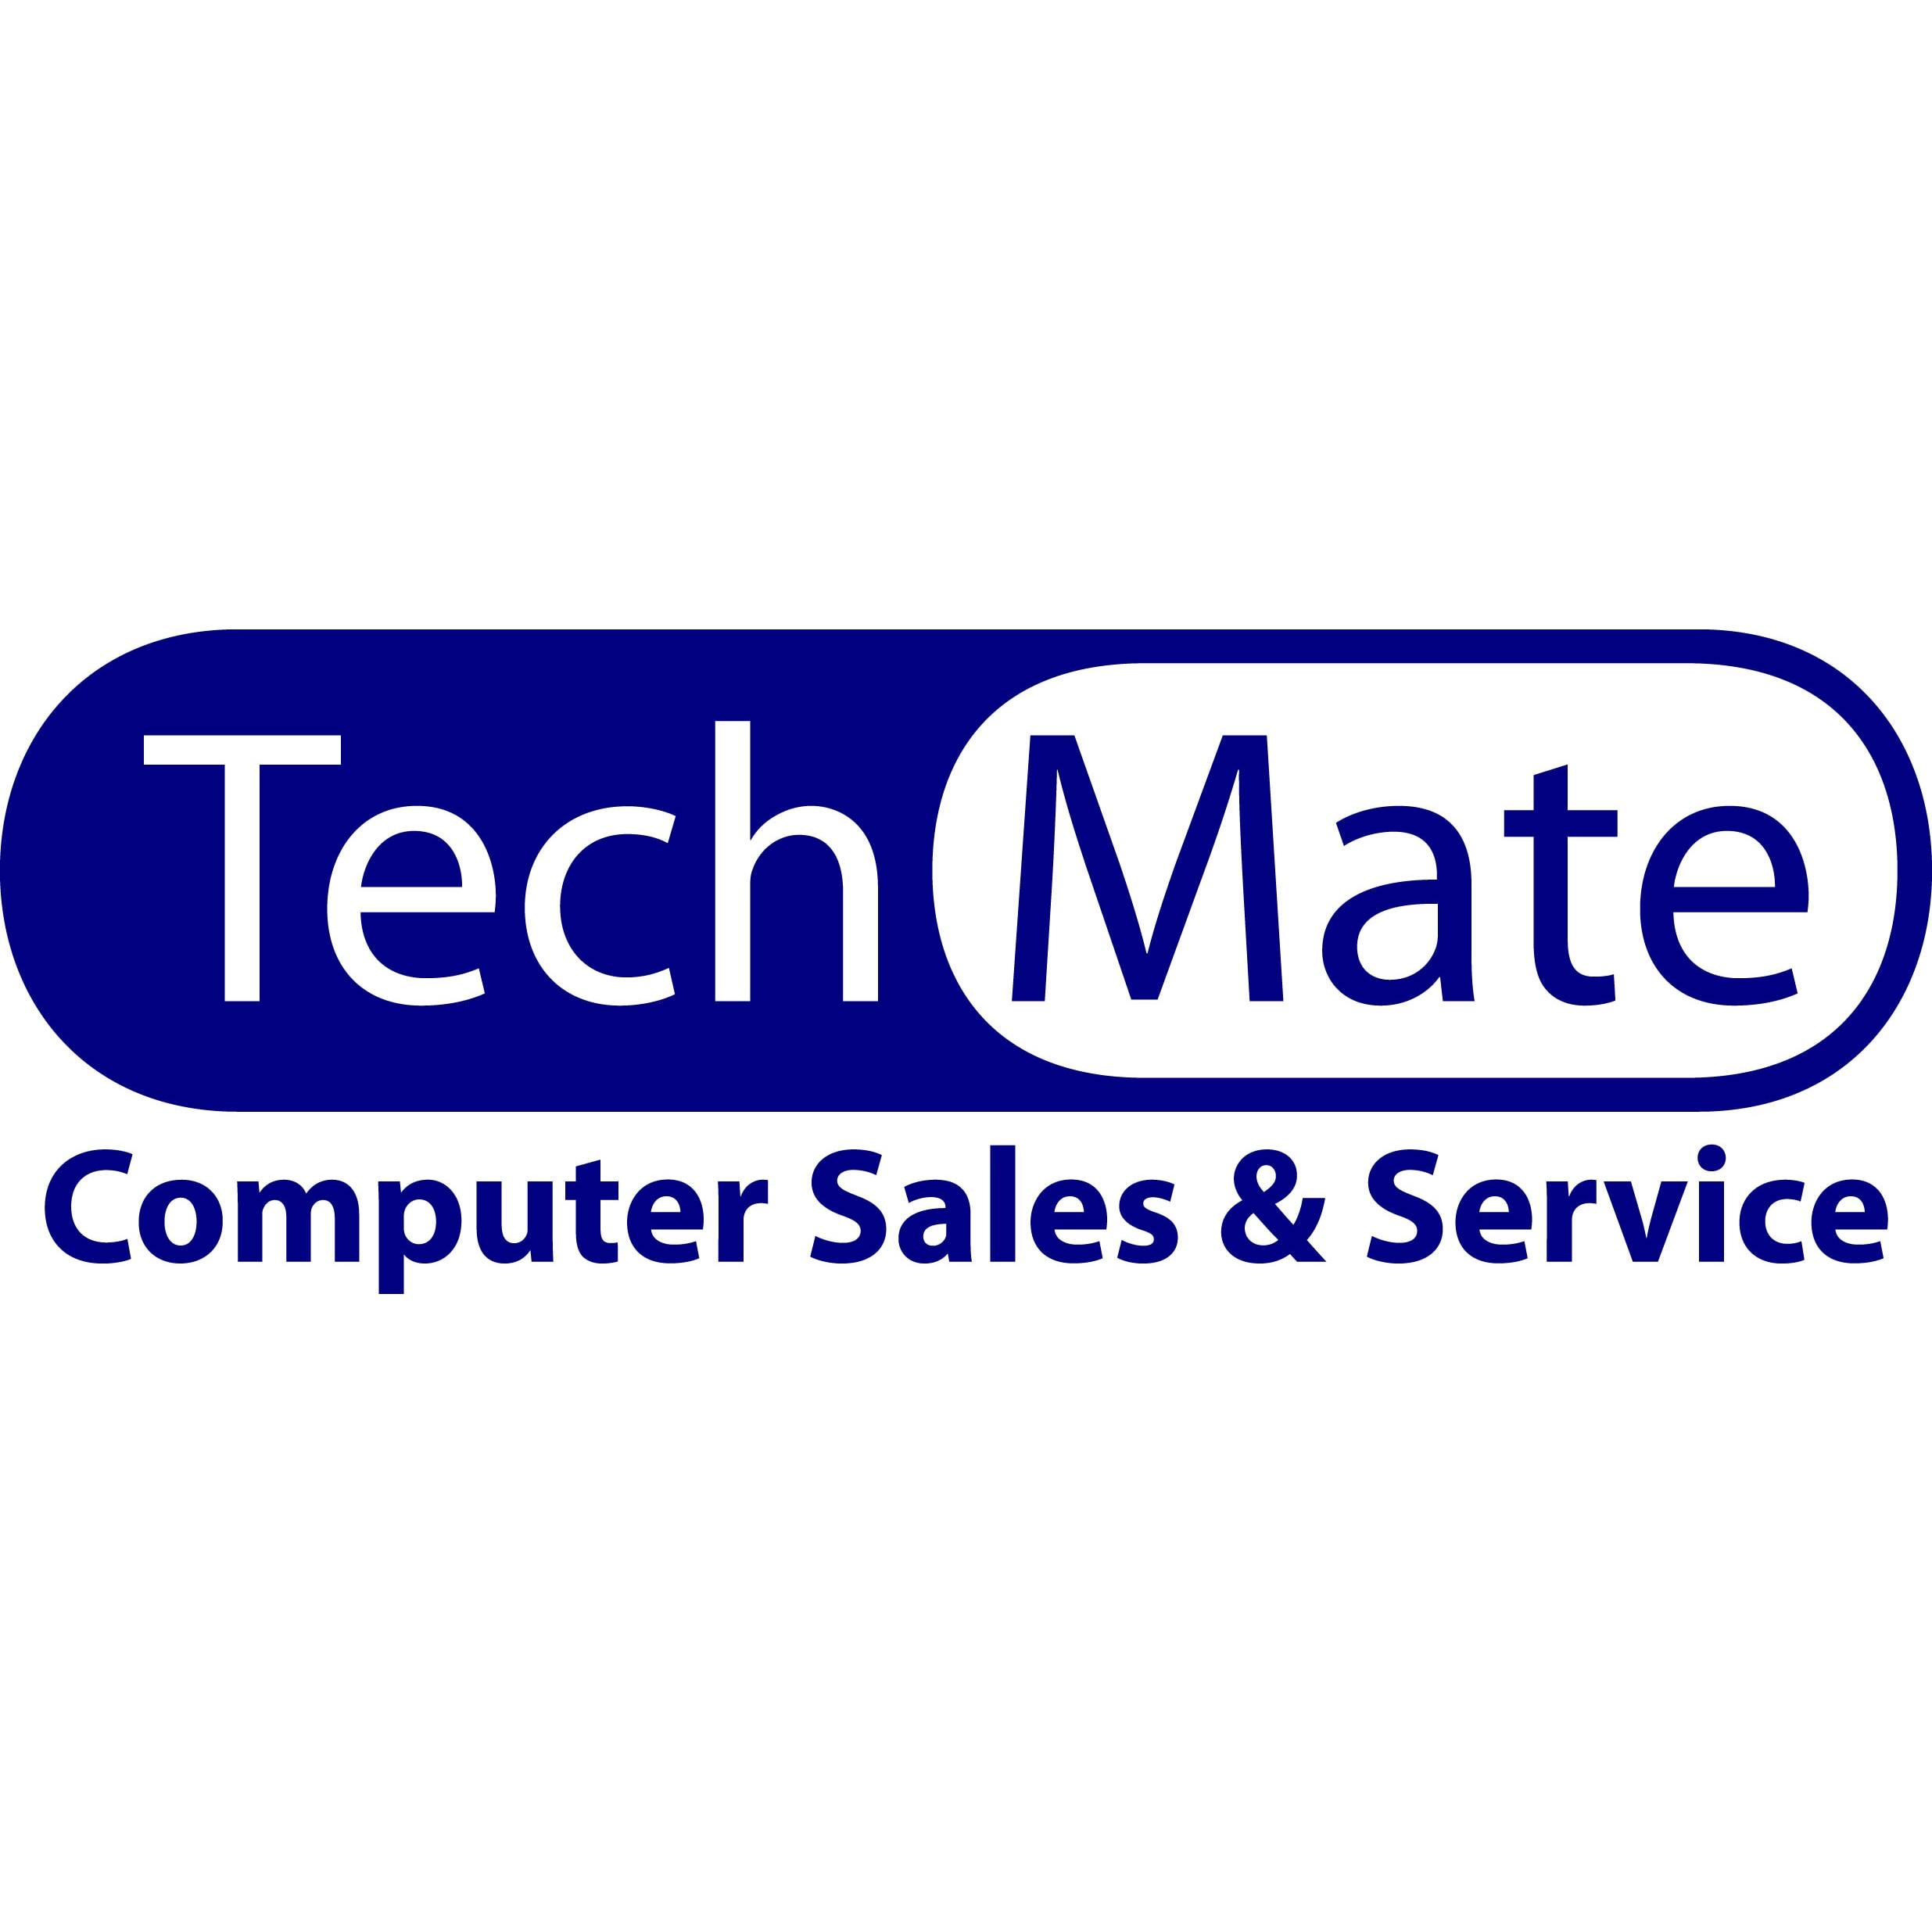 TechMate Computer Sales & Service Photo